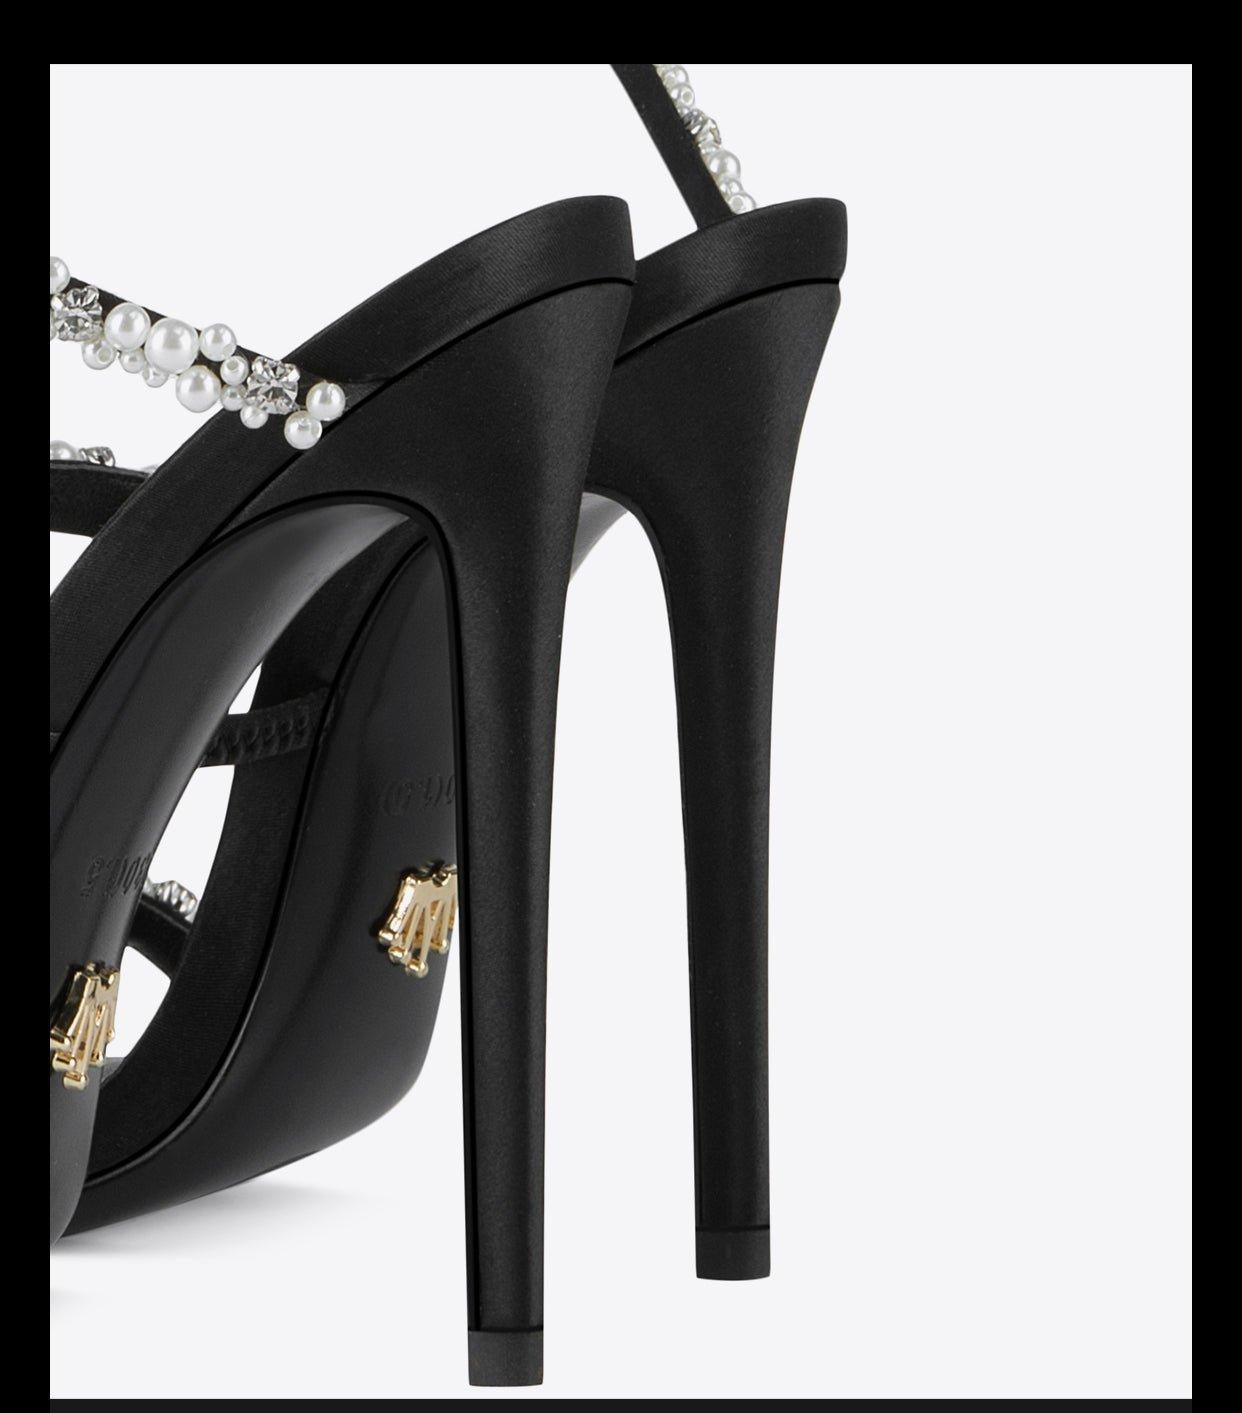 Women Black High Heels Bows Pointed Toe Stiletto Heel Ankle Strap Pumps -  Milanoo.com